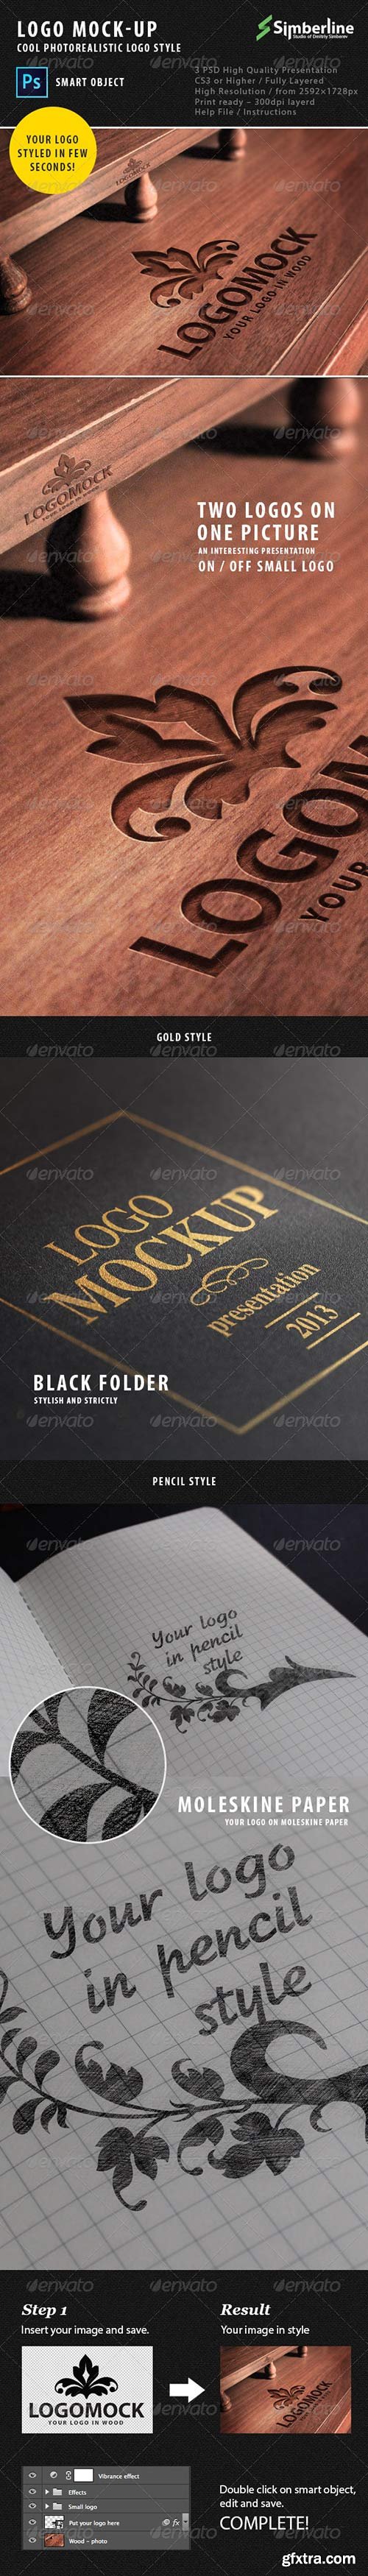 GraphicRiver - Photorealistic Logo Mock-Up